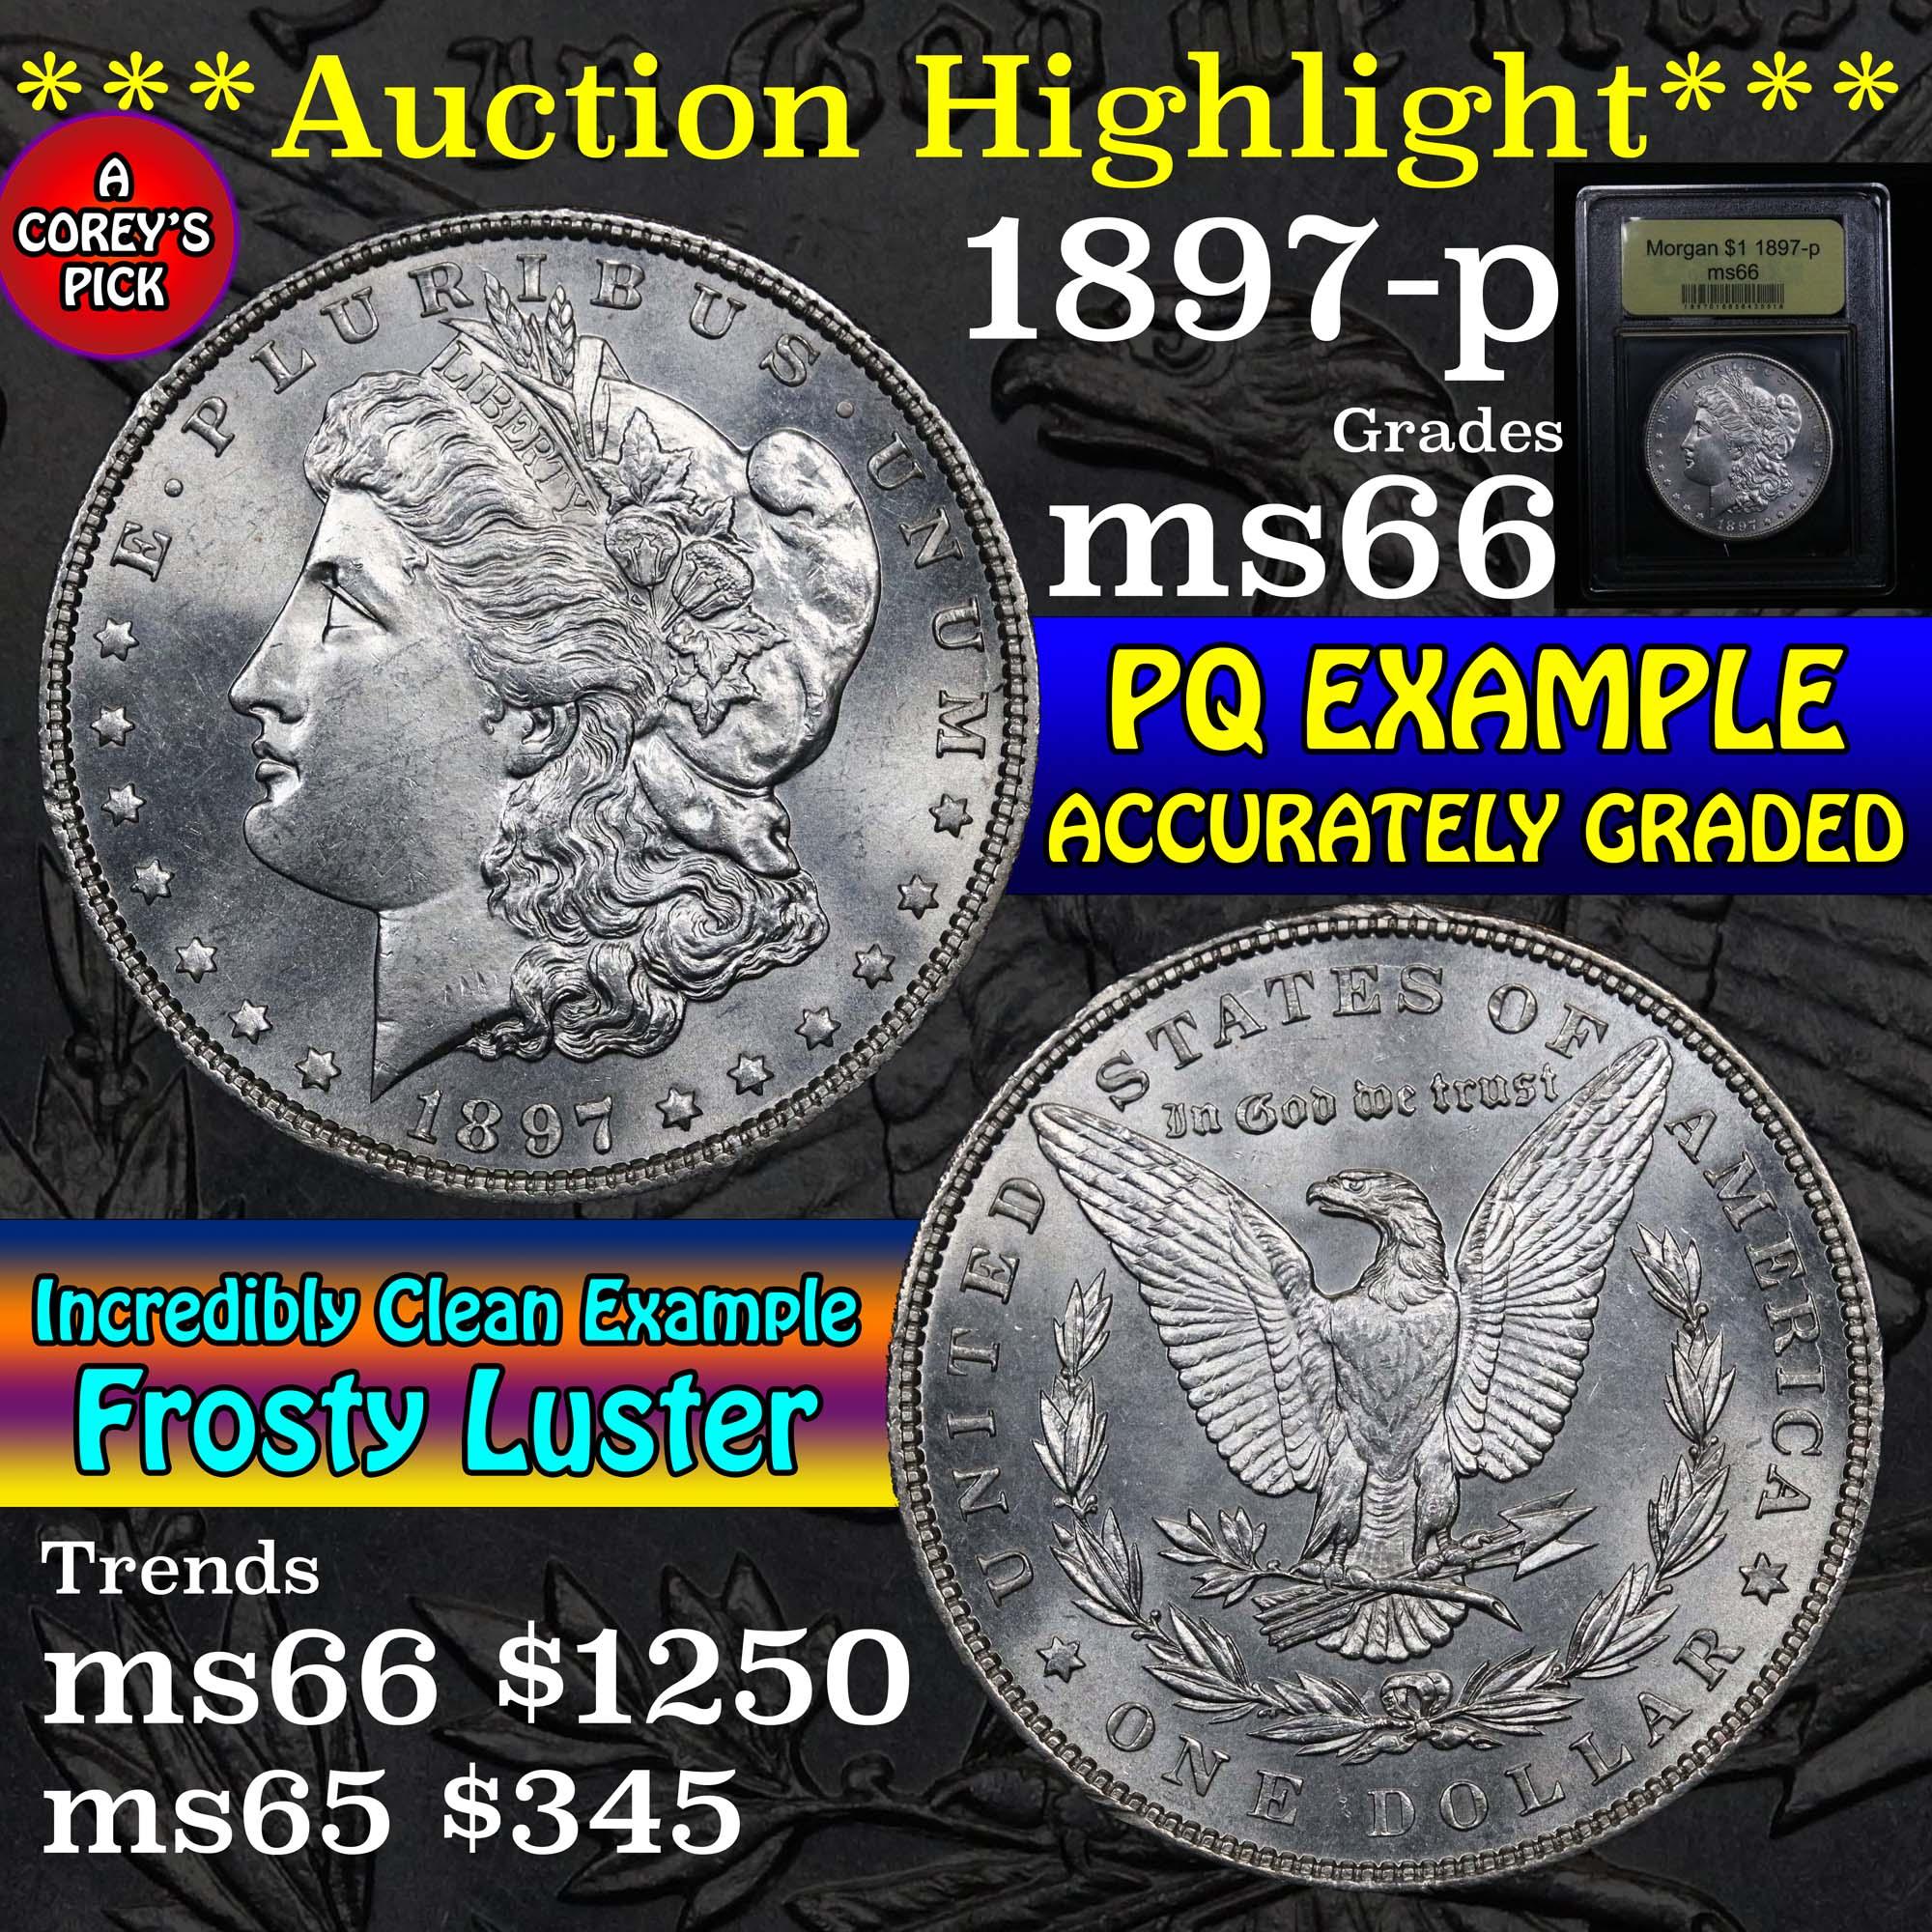 ***Auction Highlight*** 1897-p Morgan Dollar $1 Graded GEM+ Unc by USCG (fc)